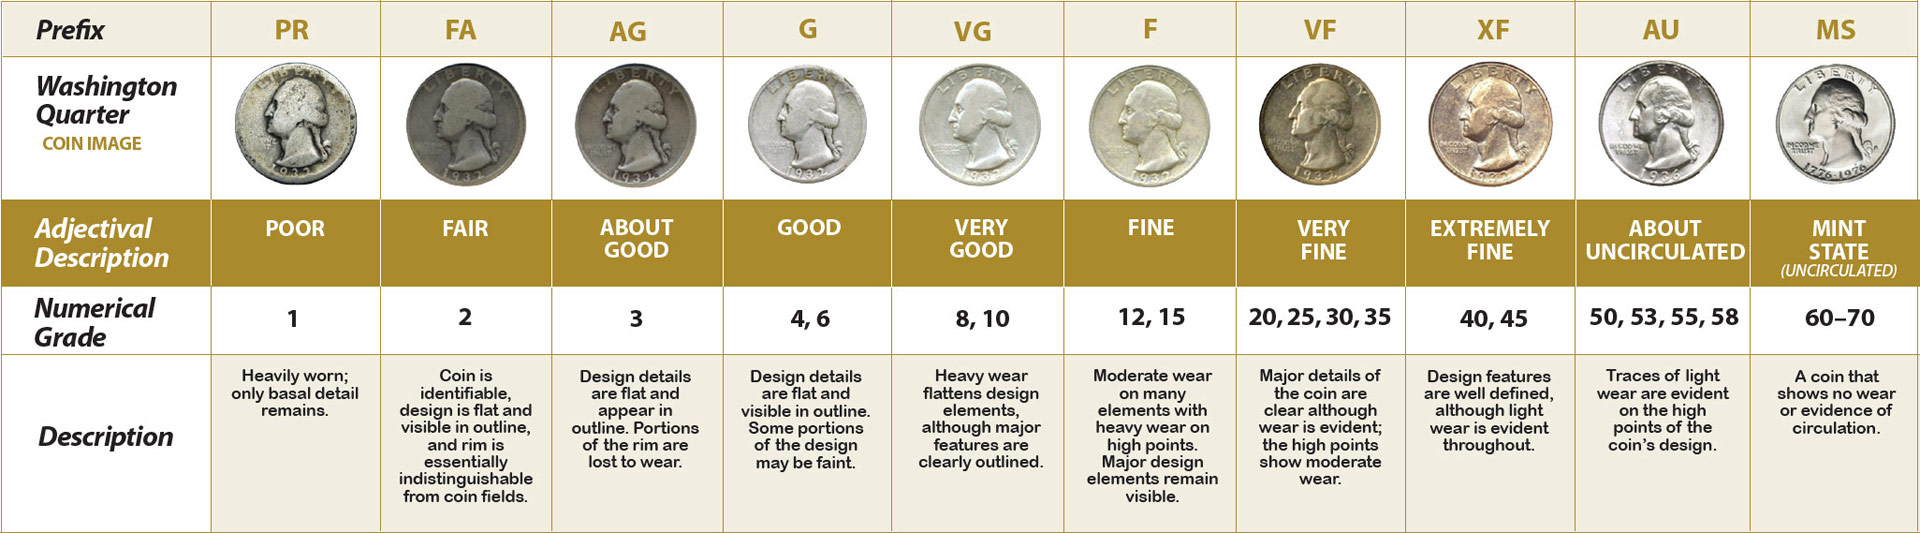 Coin Grading - A Closer Look at the Designation Details Grade